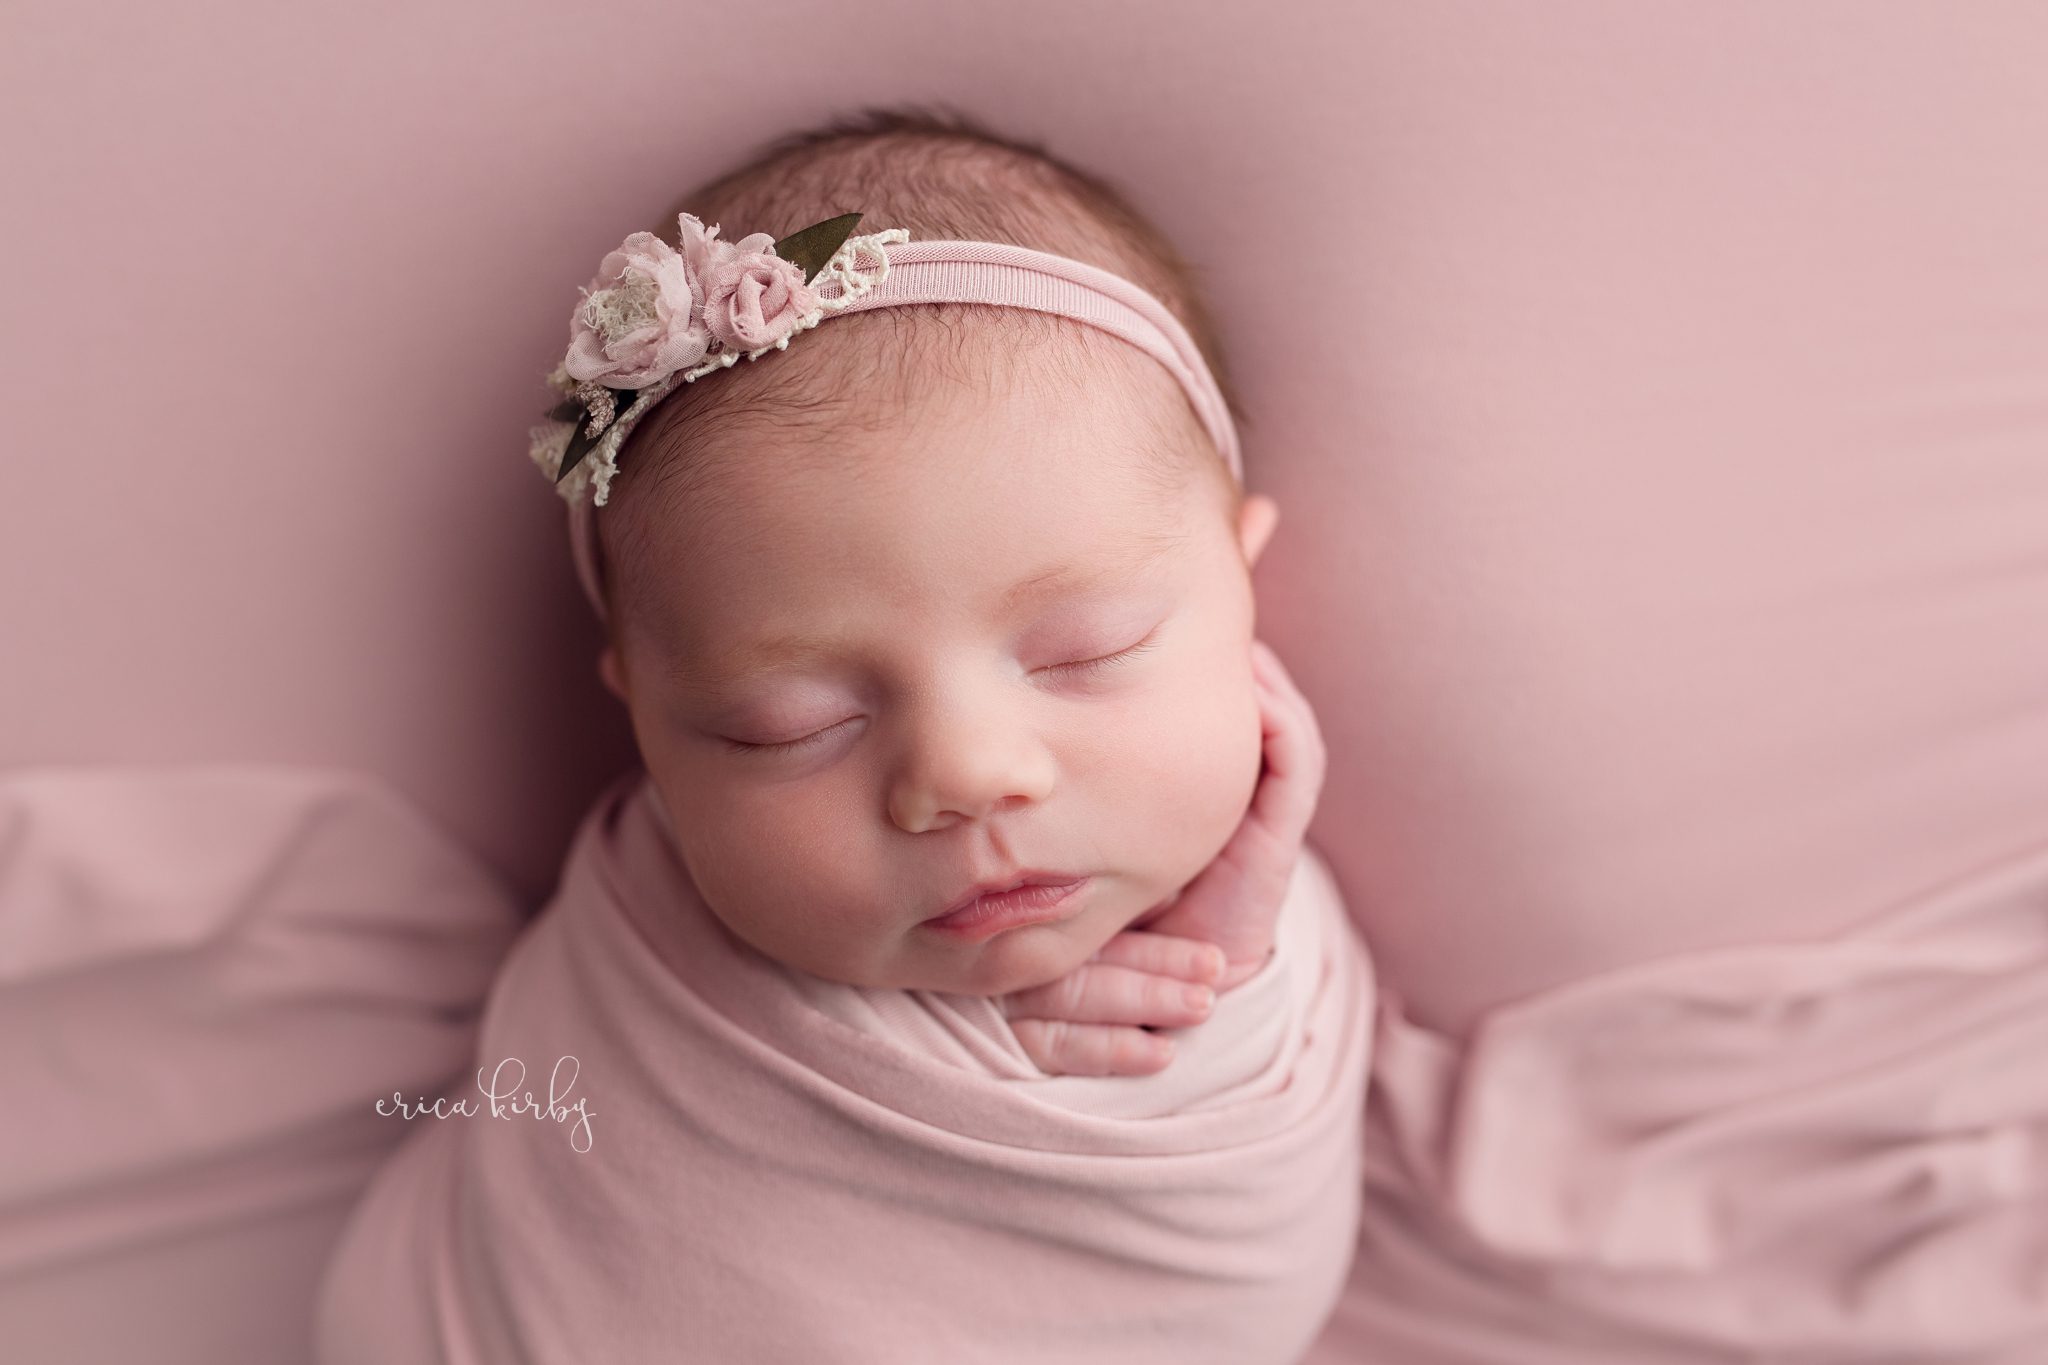 Northwest AR Newborn Studio Photography - baby girl newborn photography session in bentonville arkansas studio - erica kirby photography